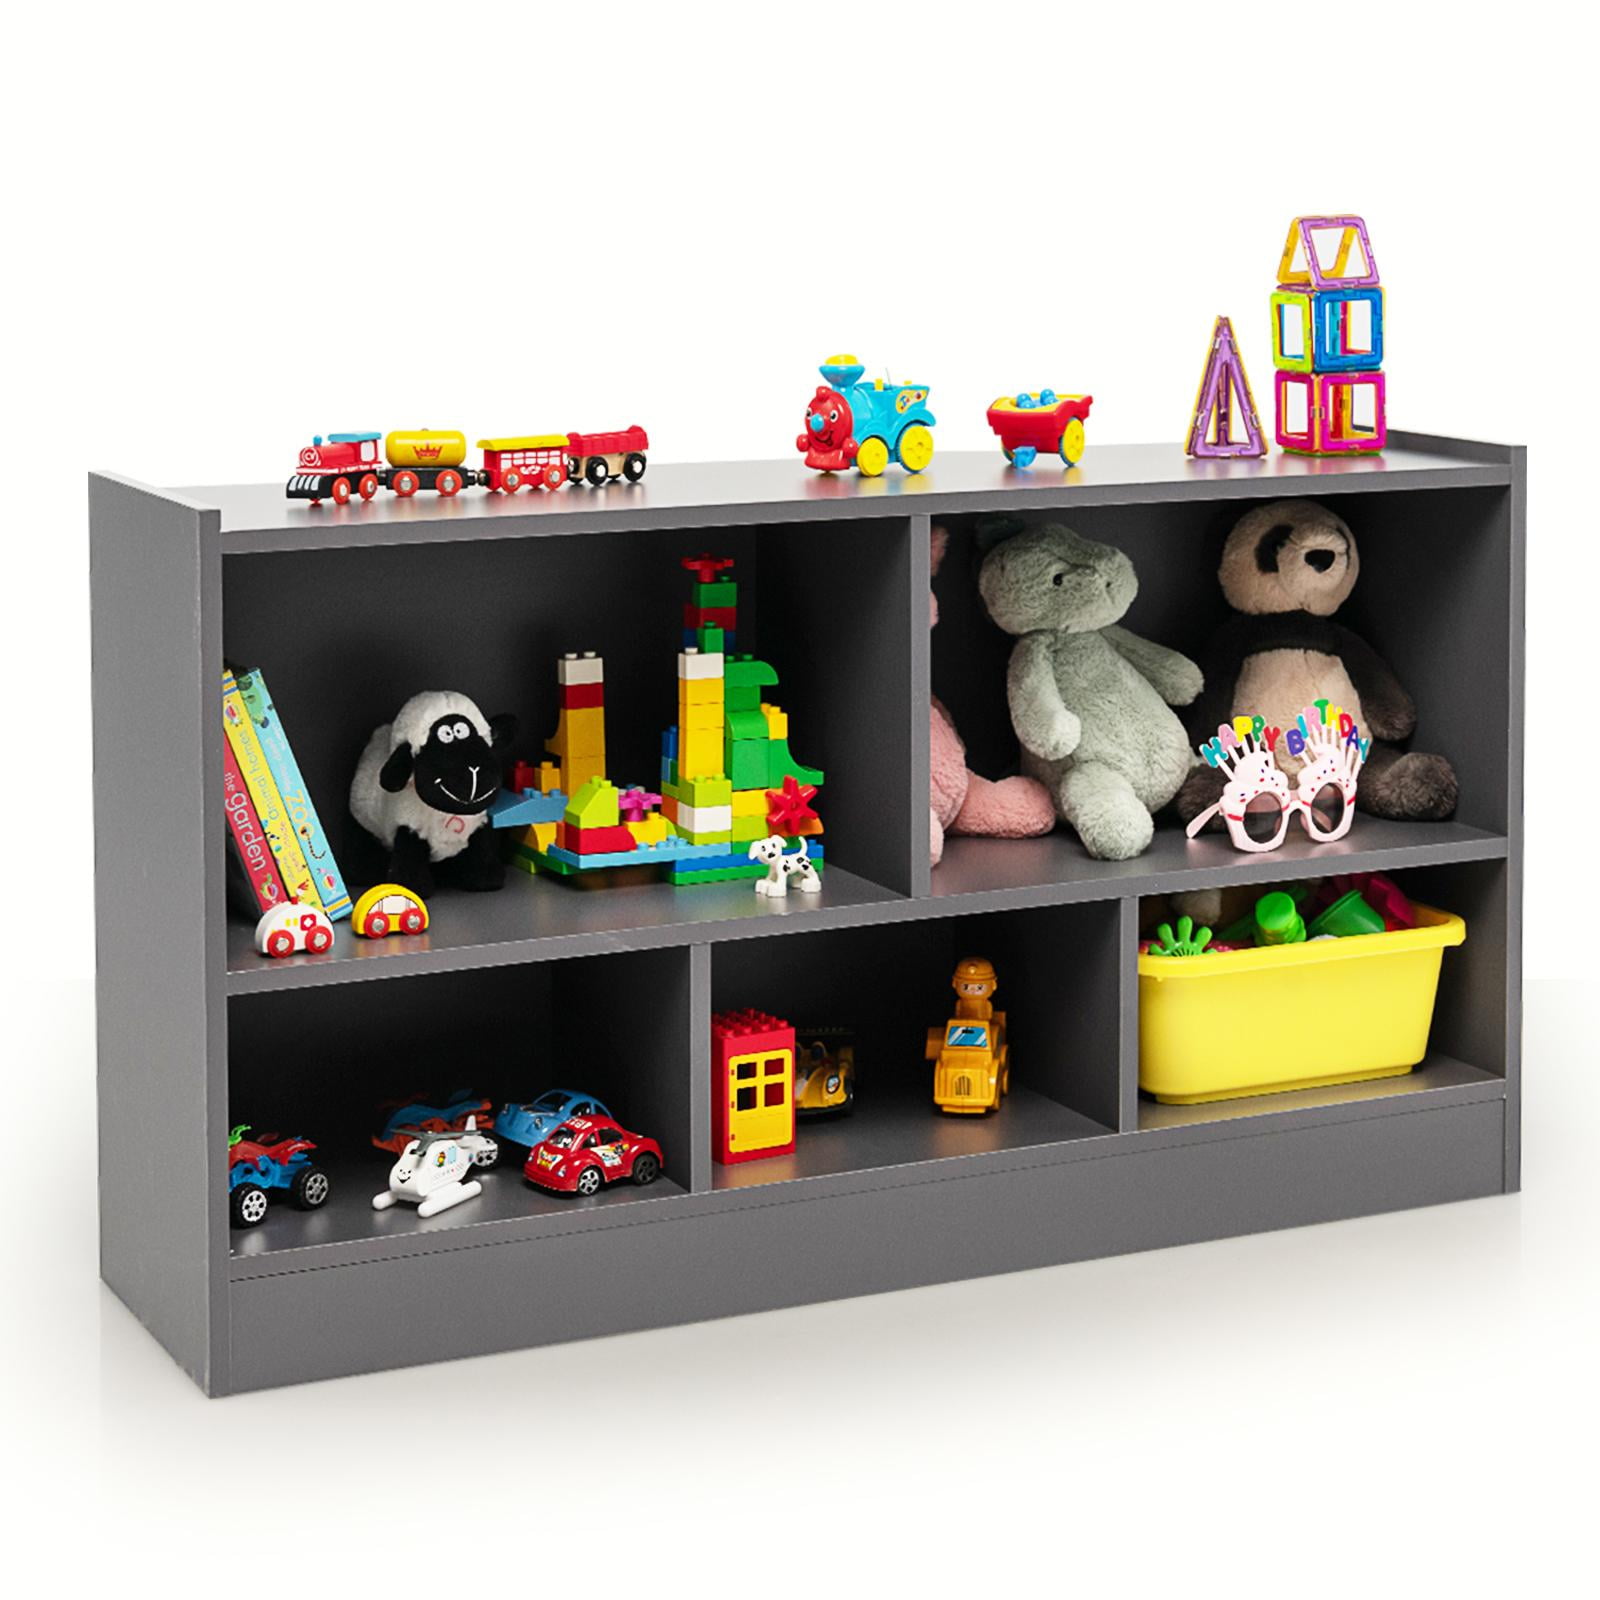 Giantex.AU - Furniture, Household Supplies, Raised Bed, Kids Toys